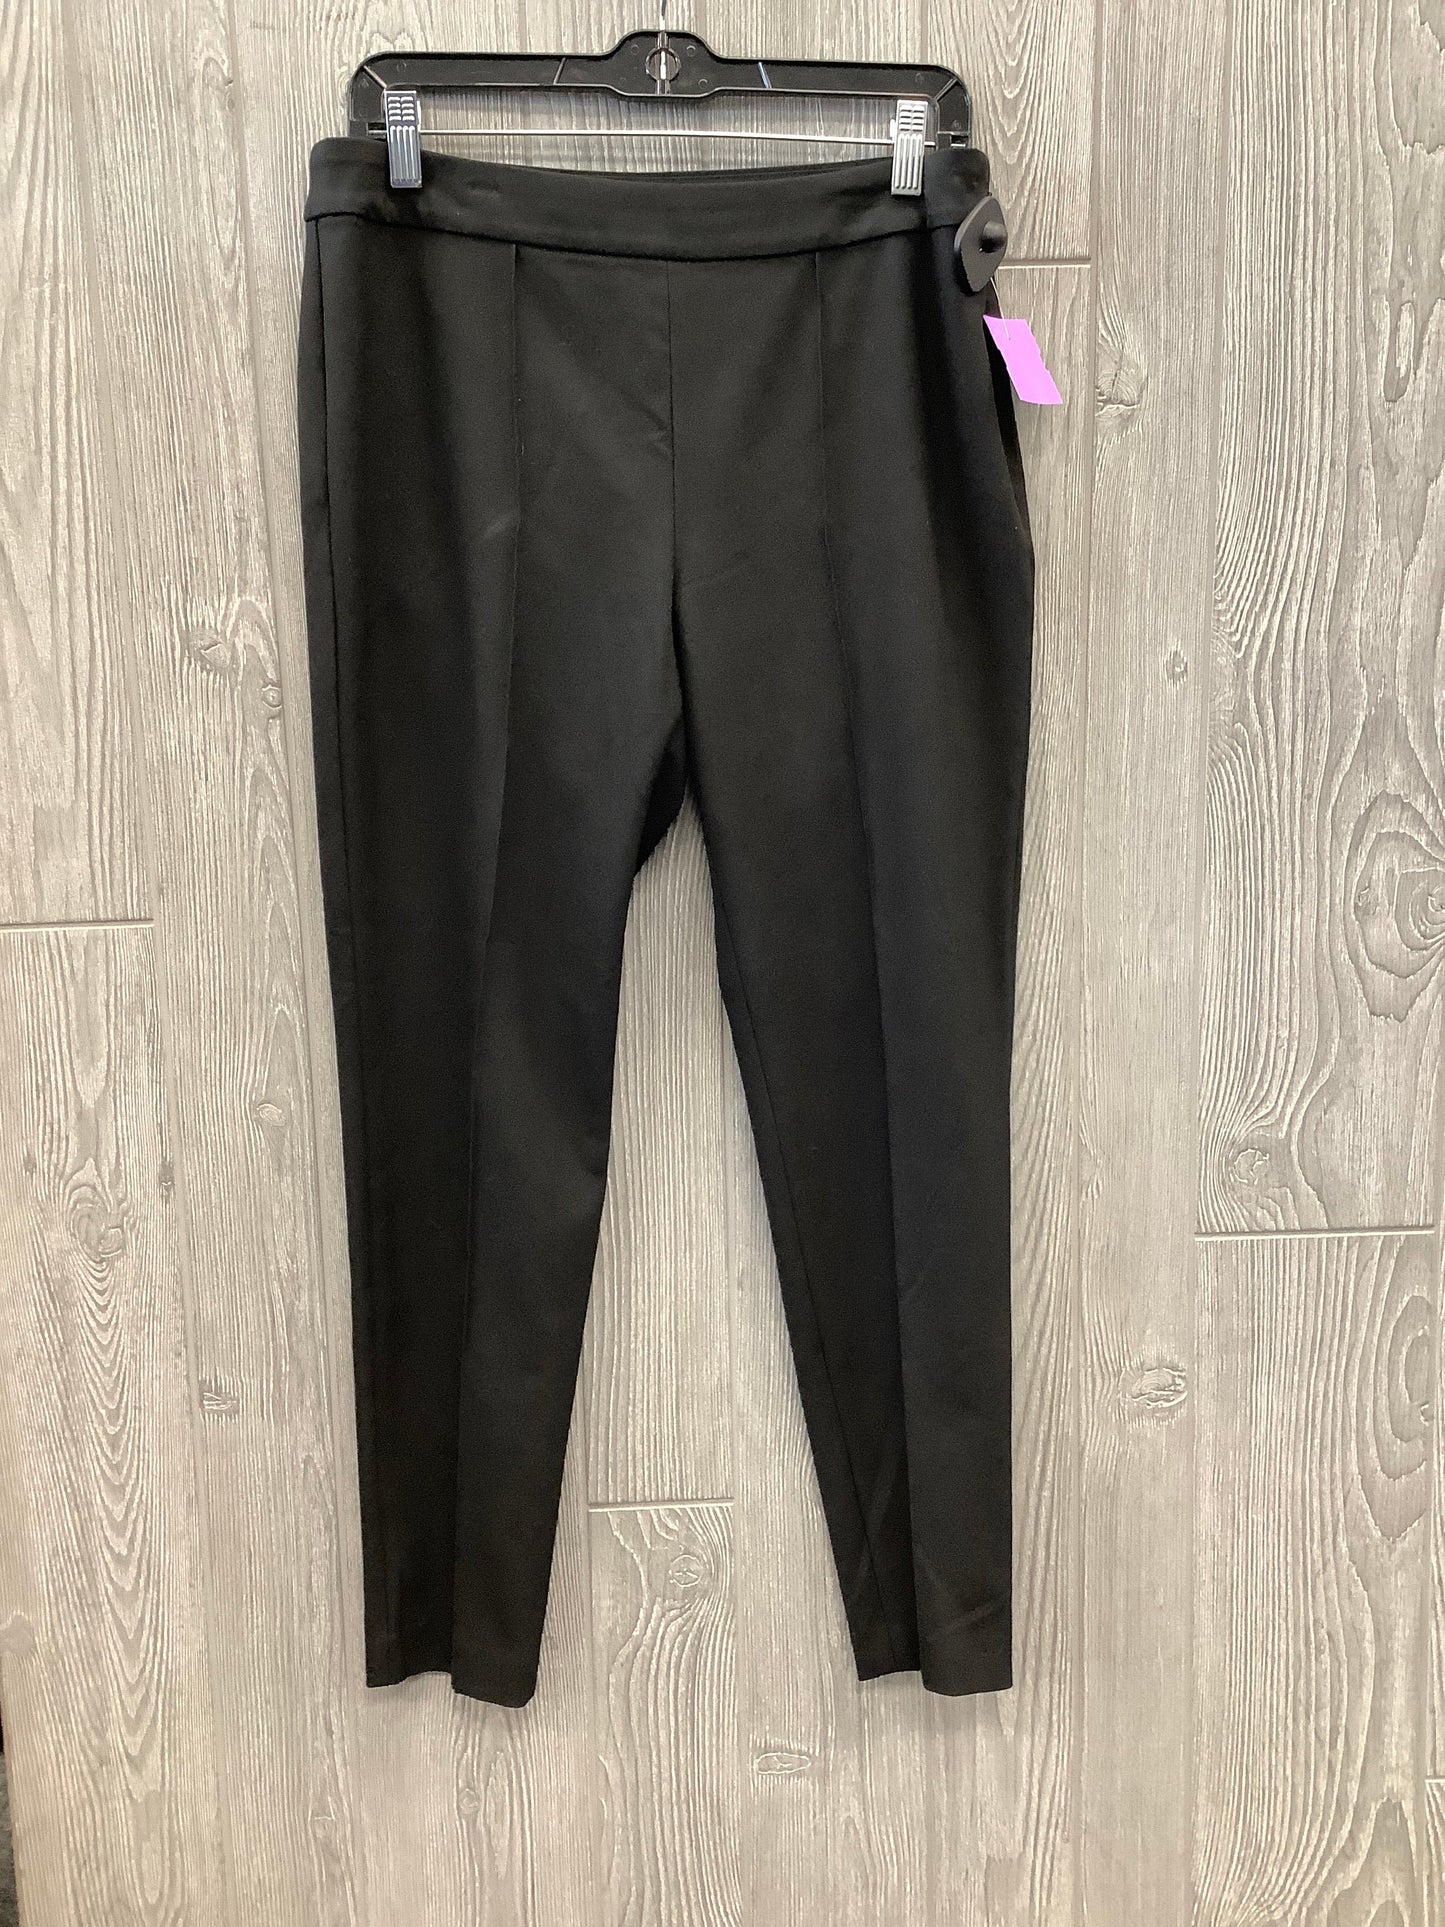 Black Pants Dress Talbots, Size 8